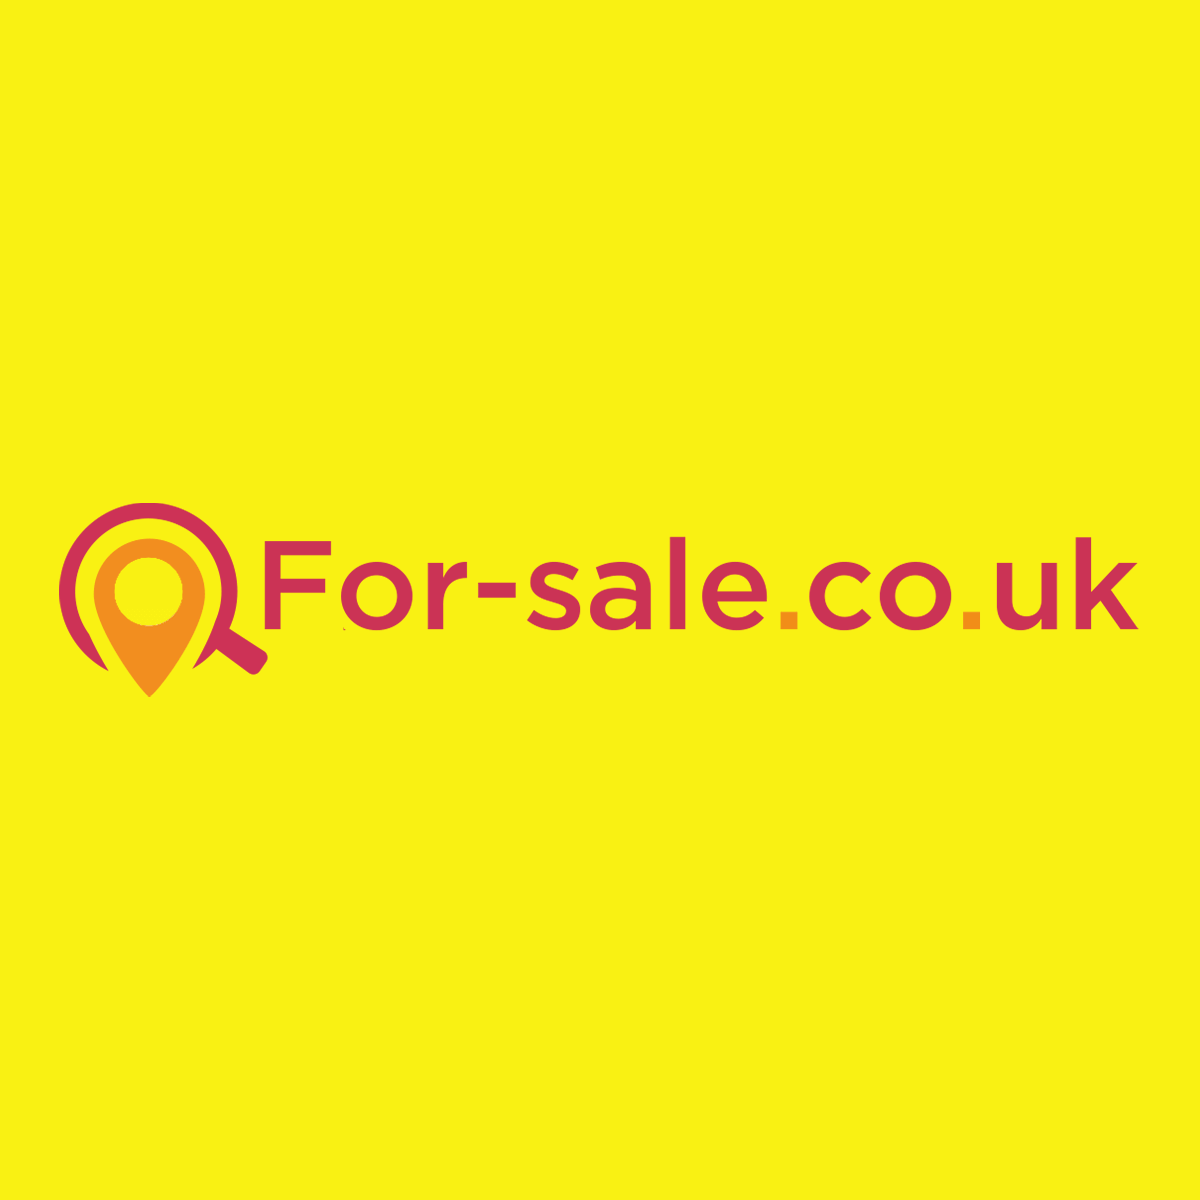 For-sale.co.uk Sale Announcements